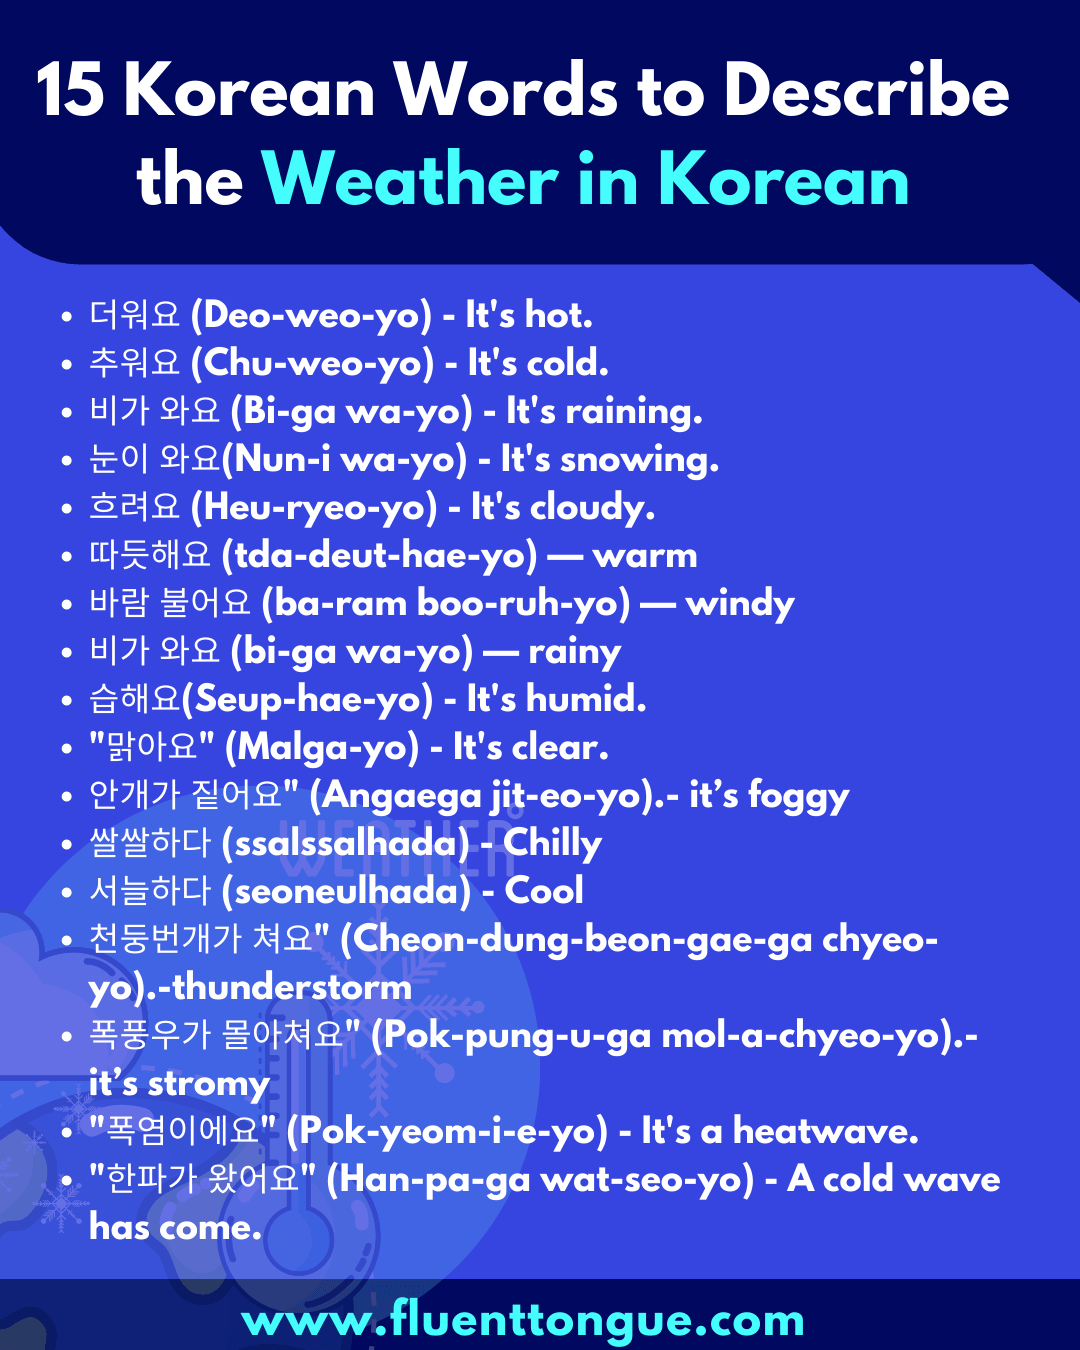 15 Korean Words to Describe the Weather in Korean